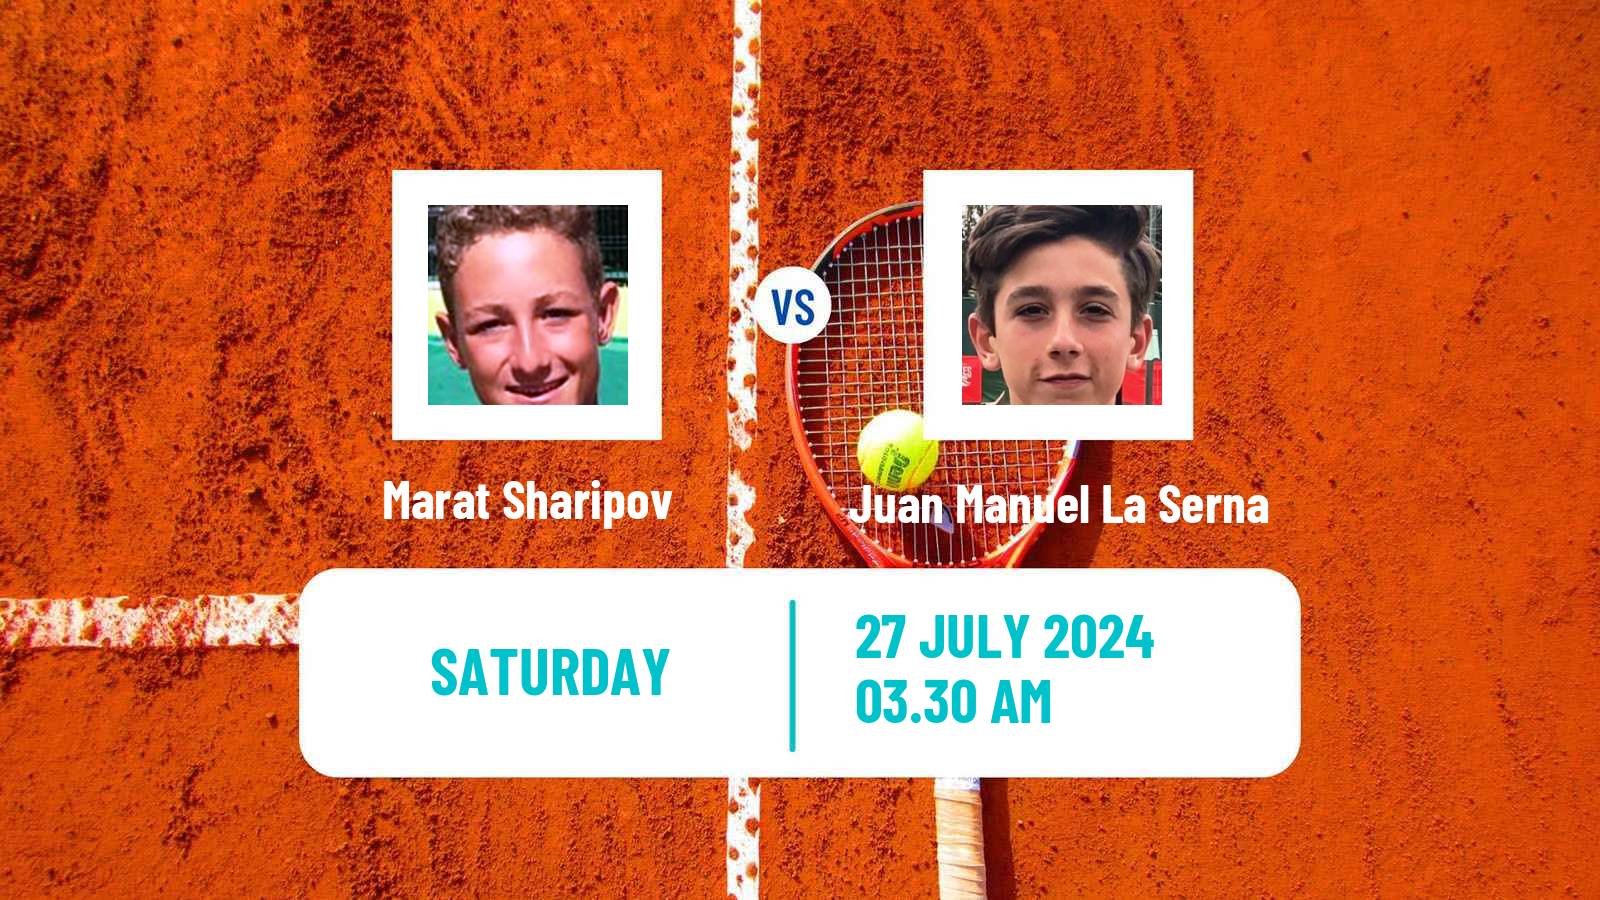 Tennis ITF M15 Kursumlijska Banja 12 Men Marat Sharipov - Juan Manuel La Serna